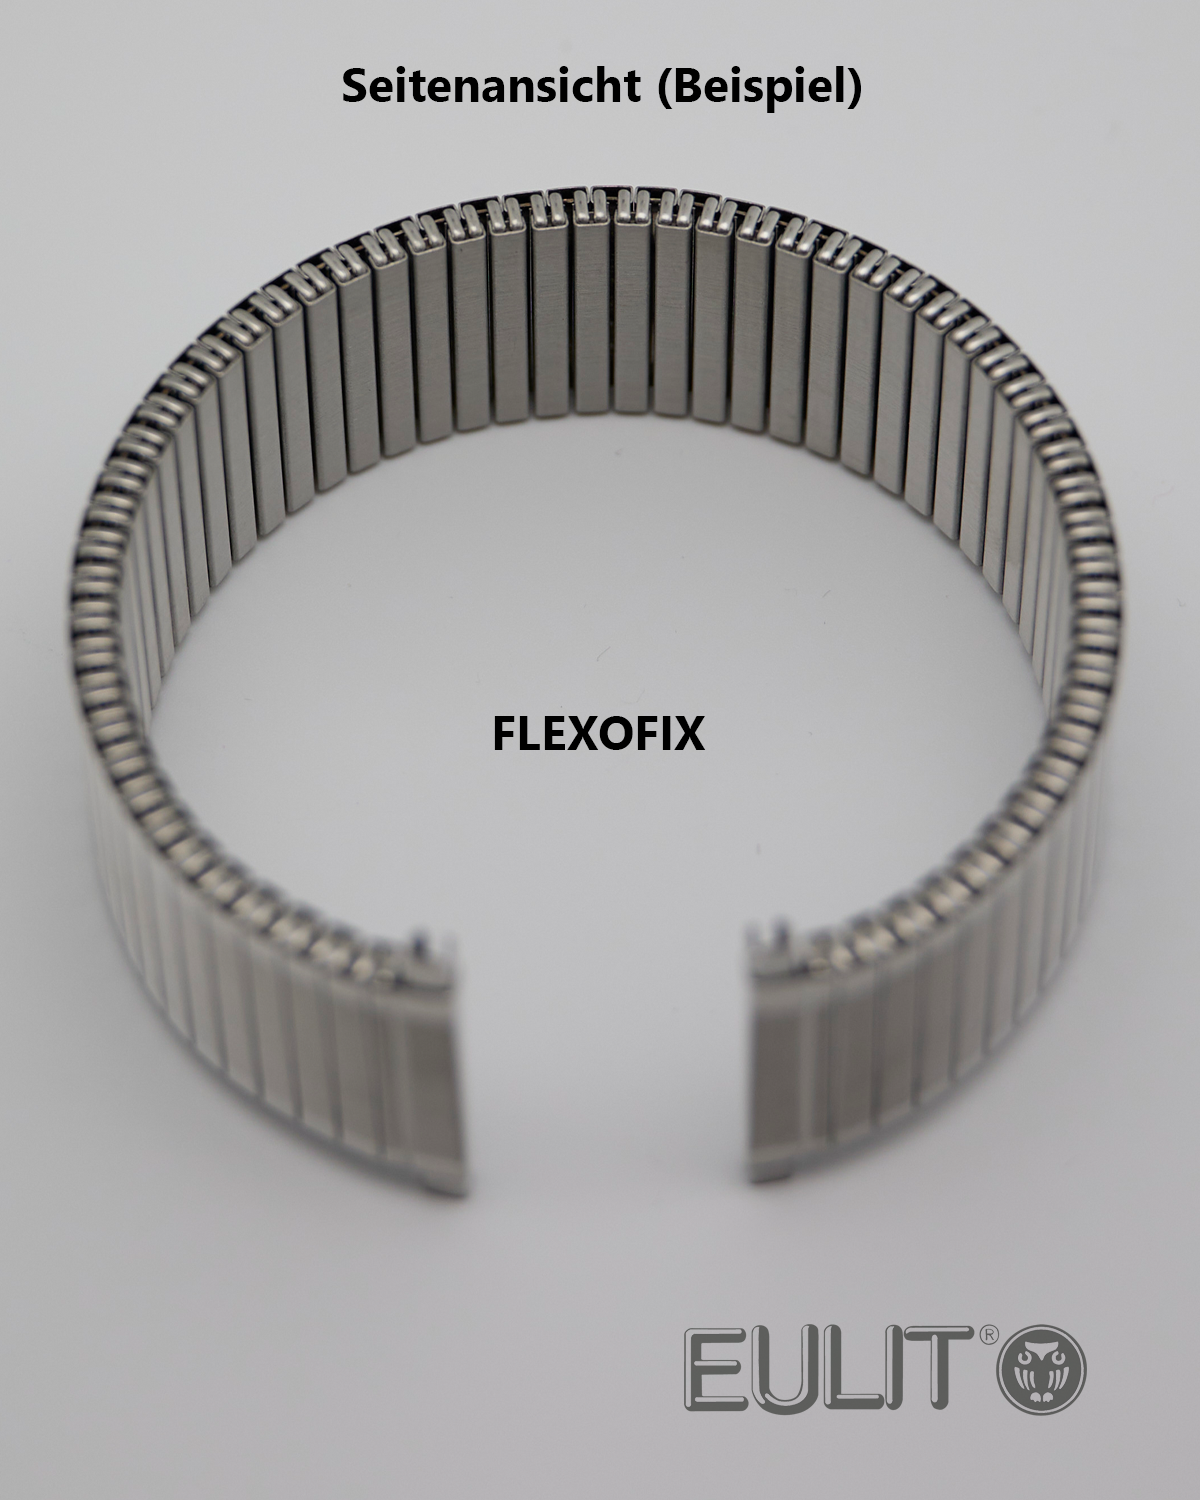 76-413181 EULIT FLEXOFIX 18-20 mm Bicolor